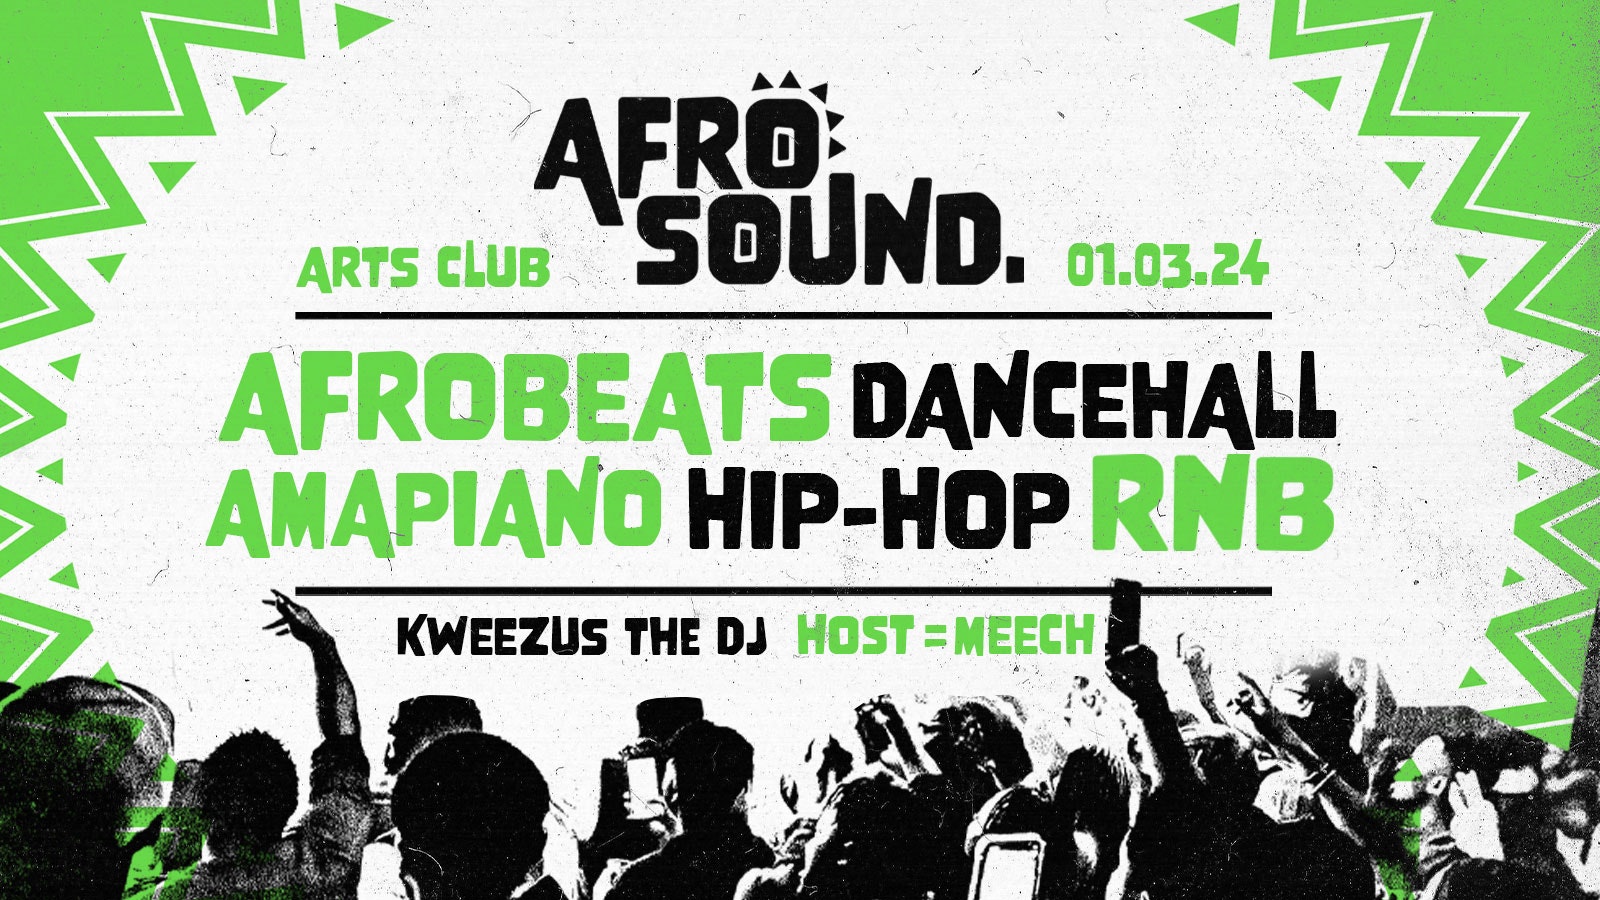 AFRO SOUND – Afrobeats, Hip-Hop, Dancehall, RnB & Amapiano 🔥